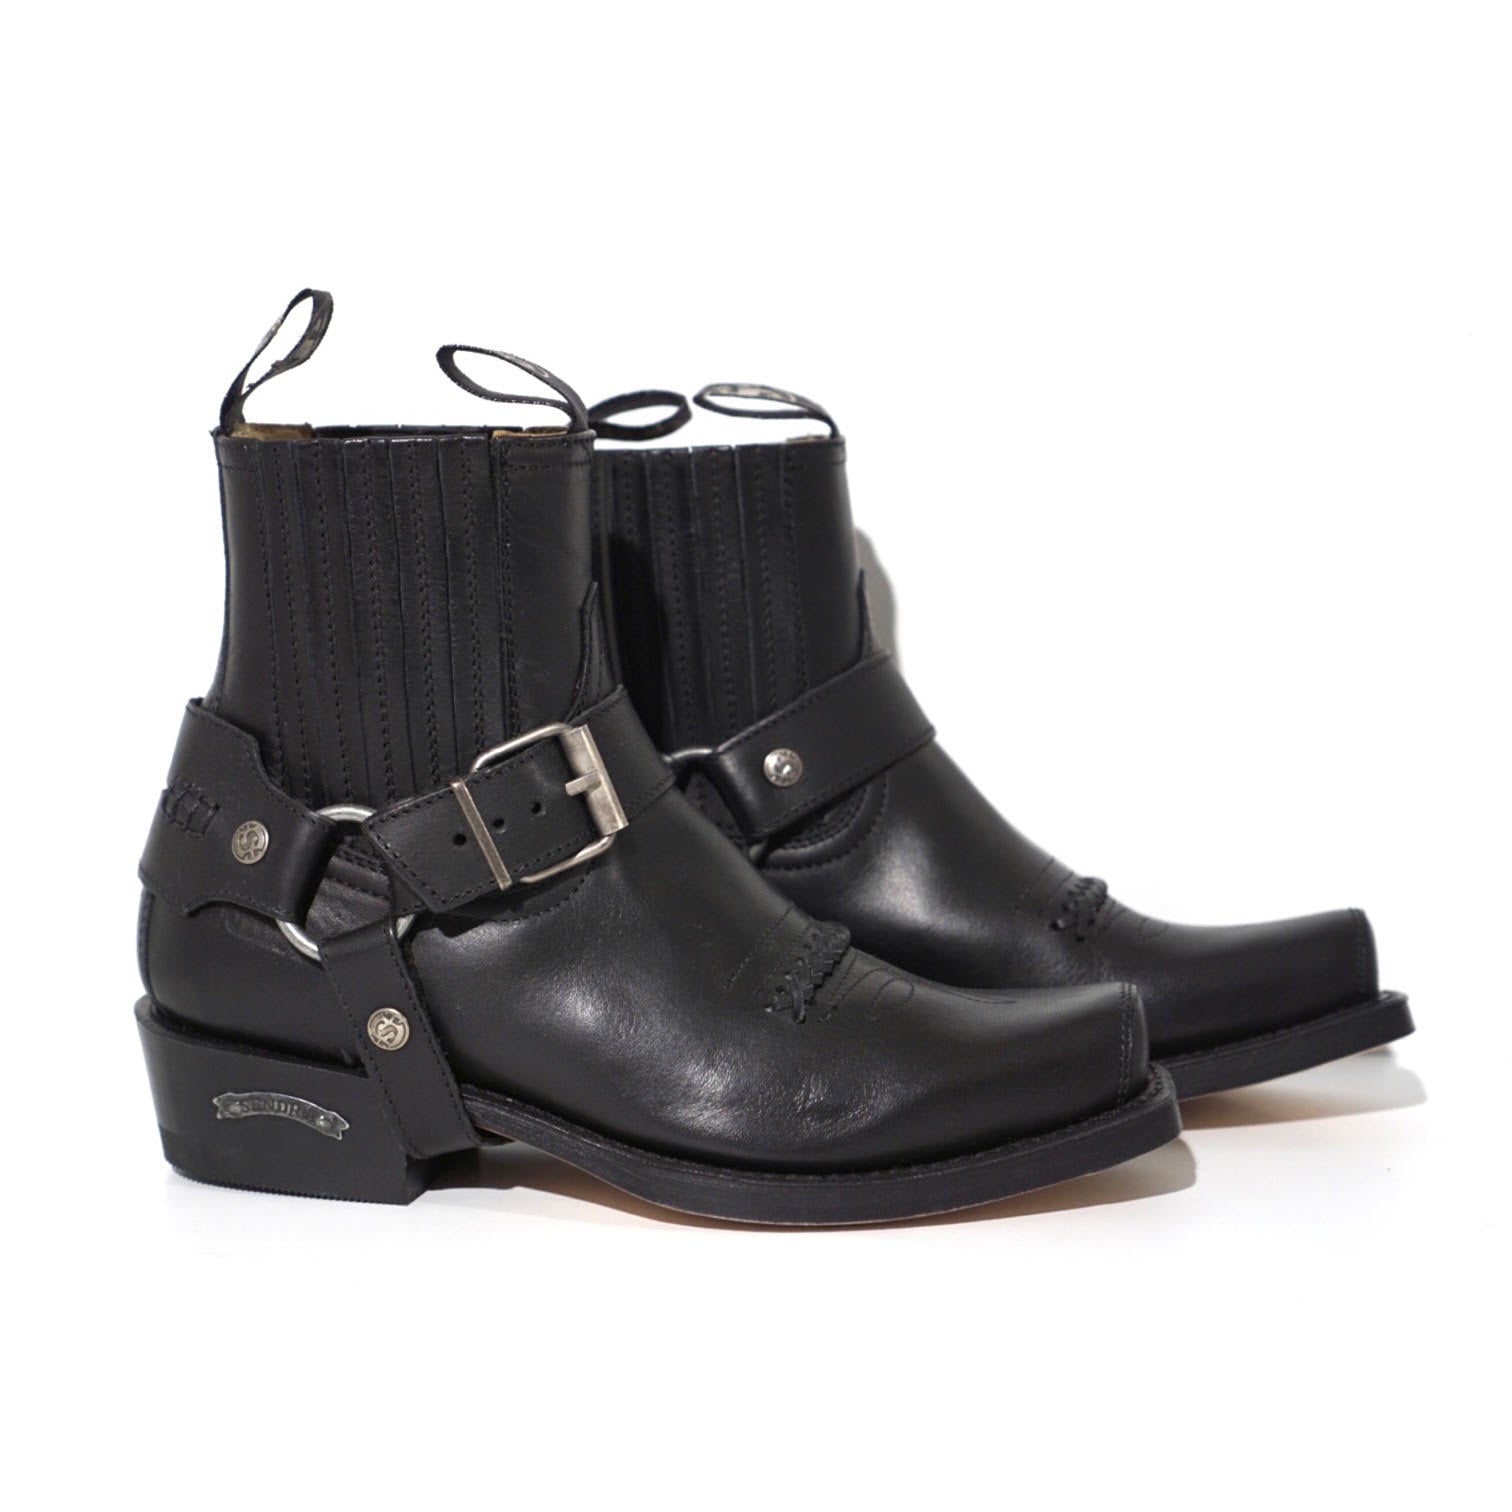 Seta boots - black